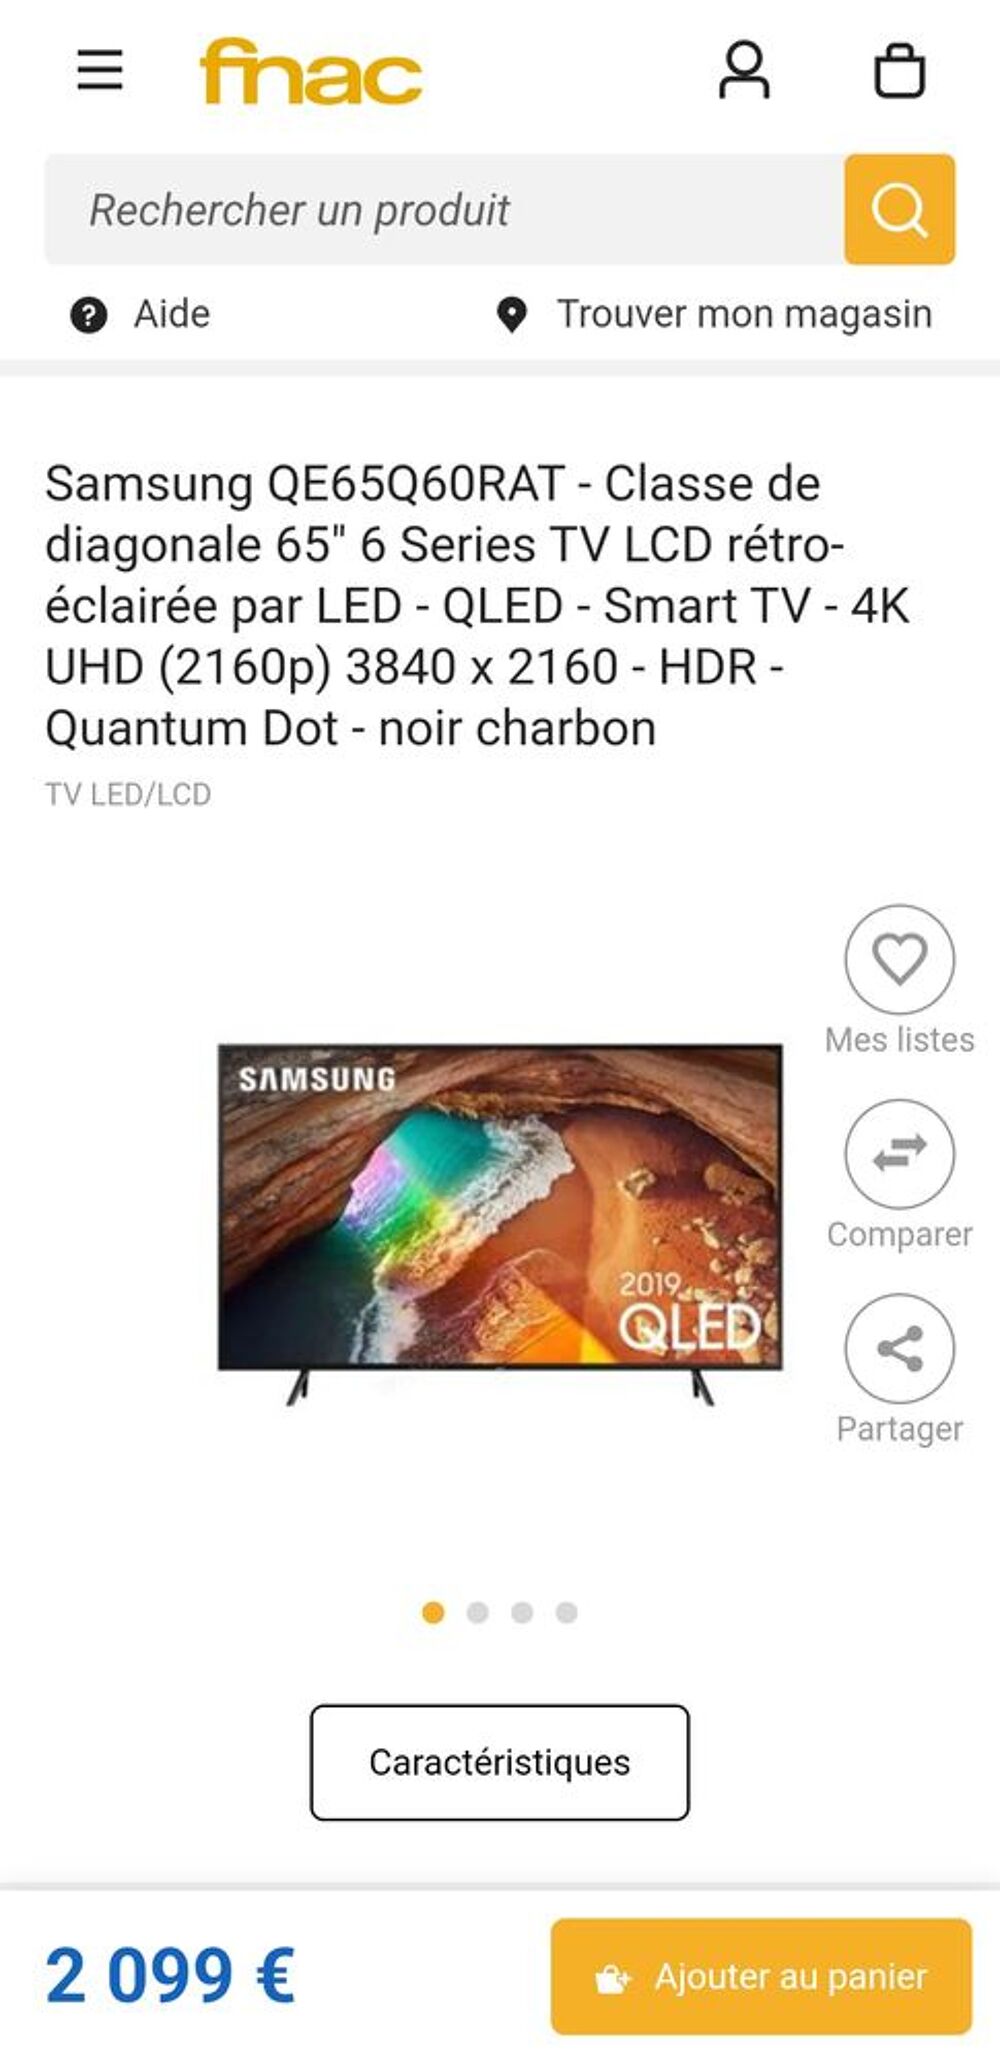 Samsung TV QLED 4K Photos/Video/TV